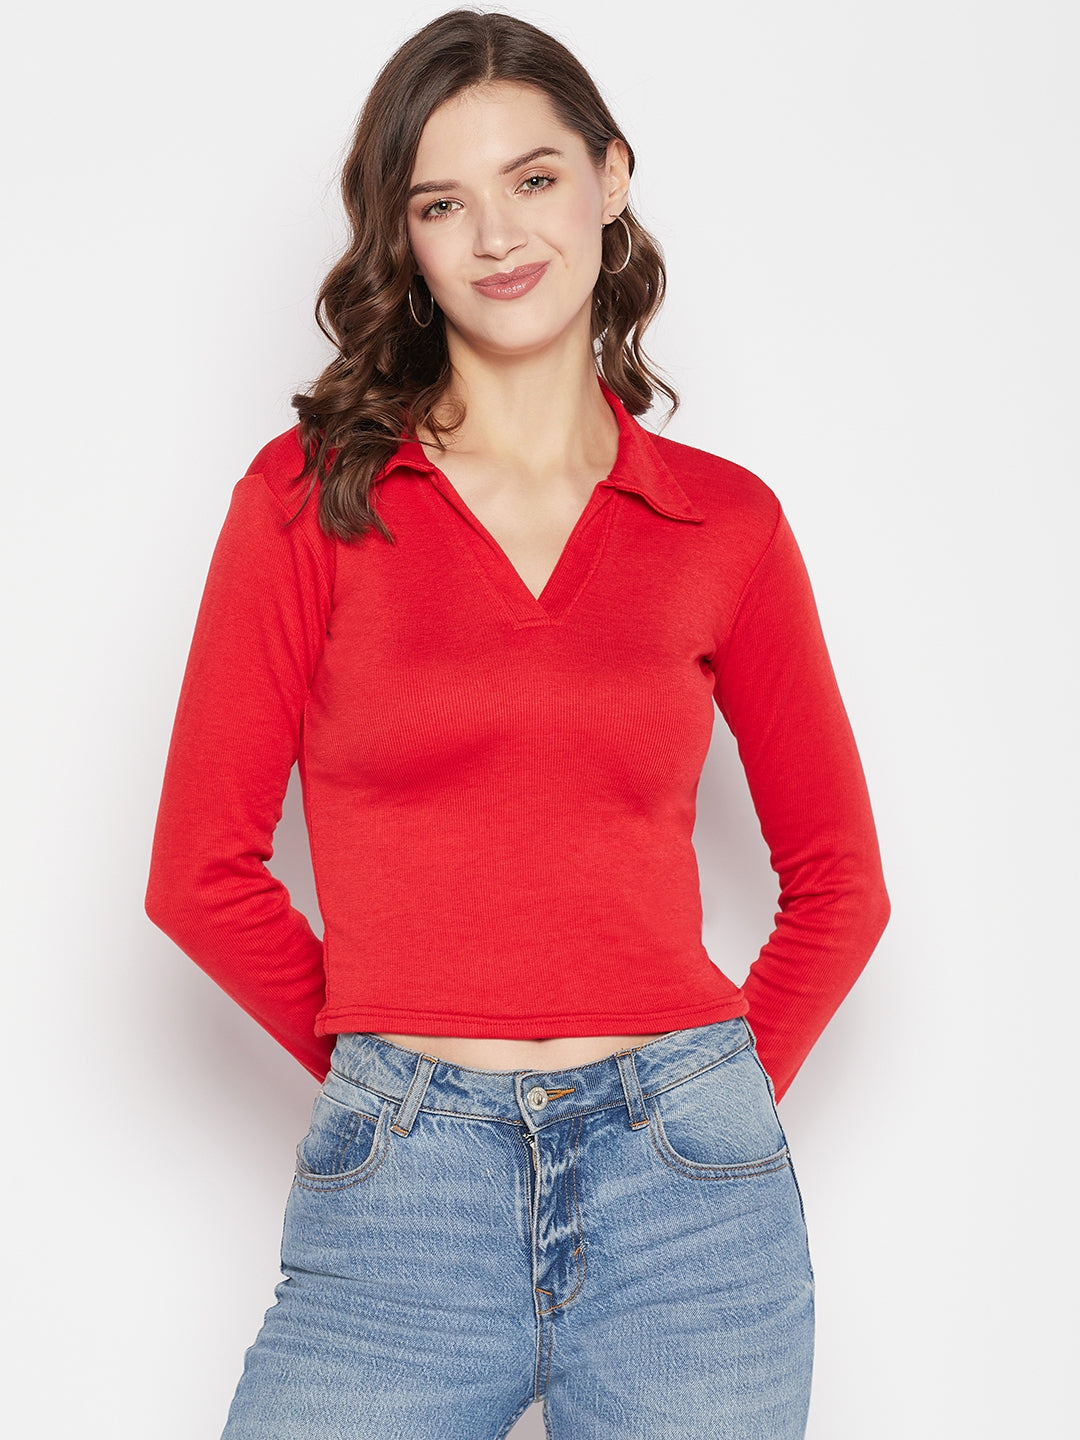 Clora Red Solid Full Sleeves Crop Top